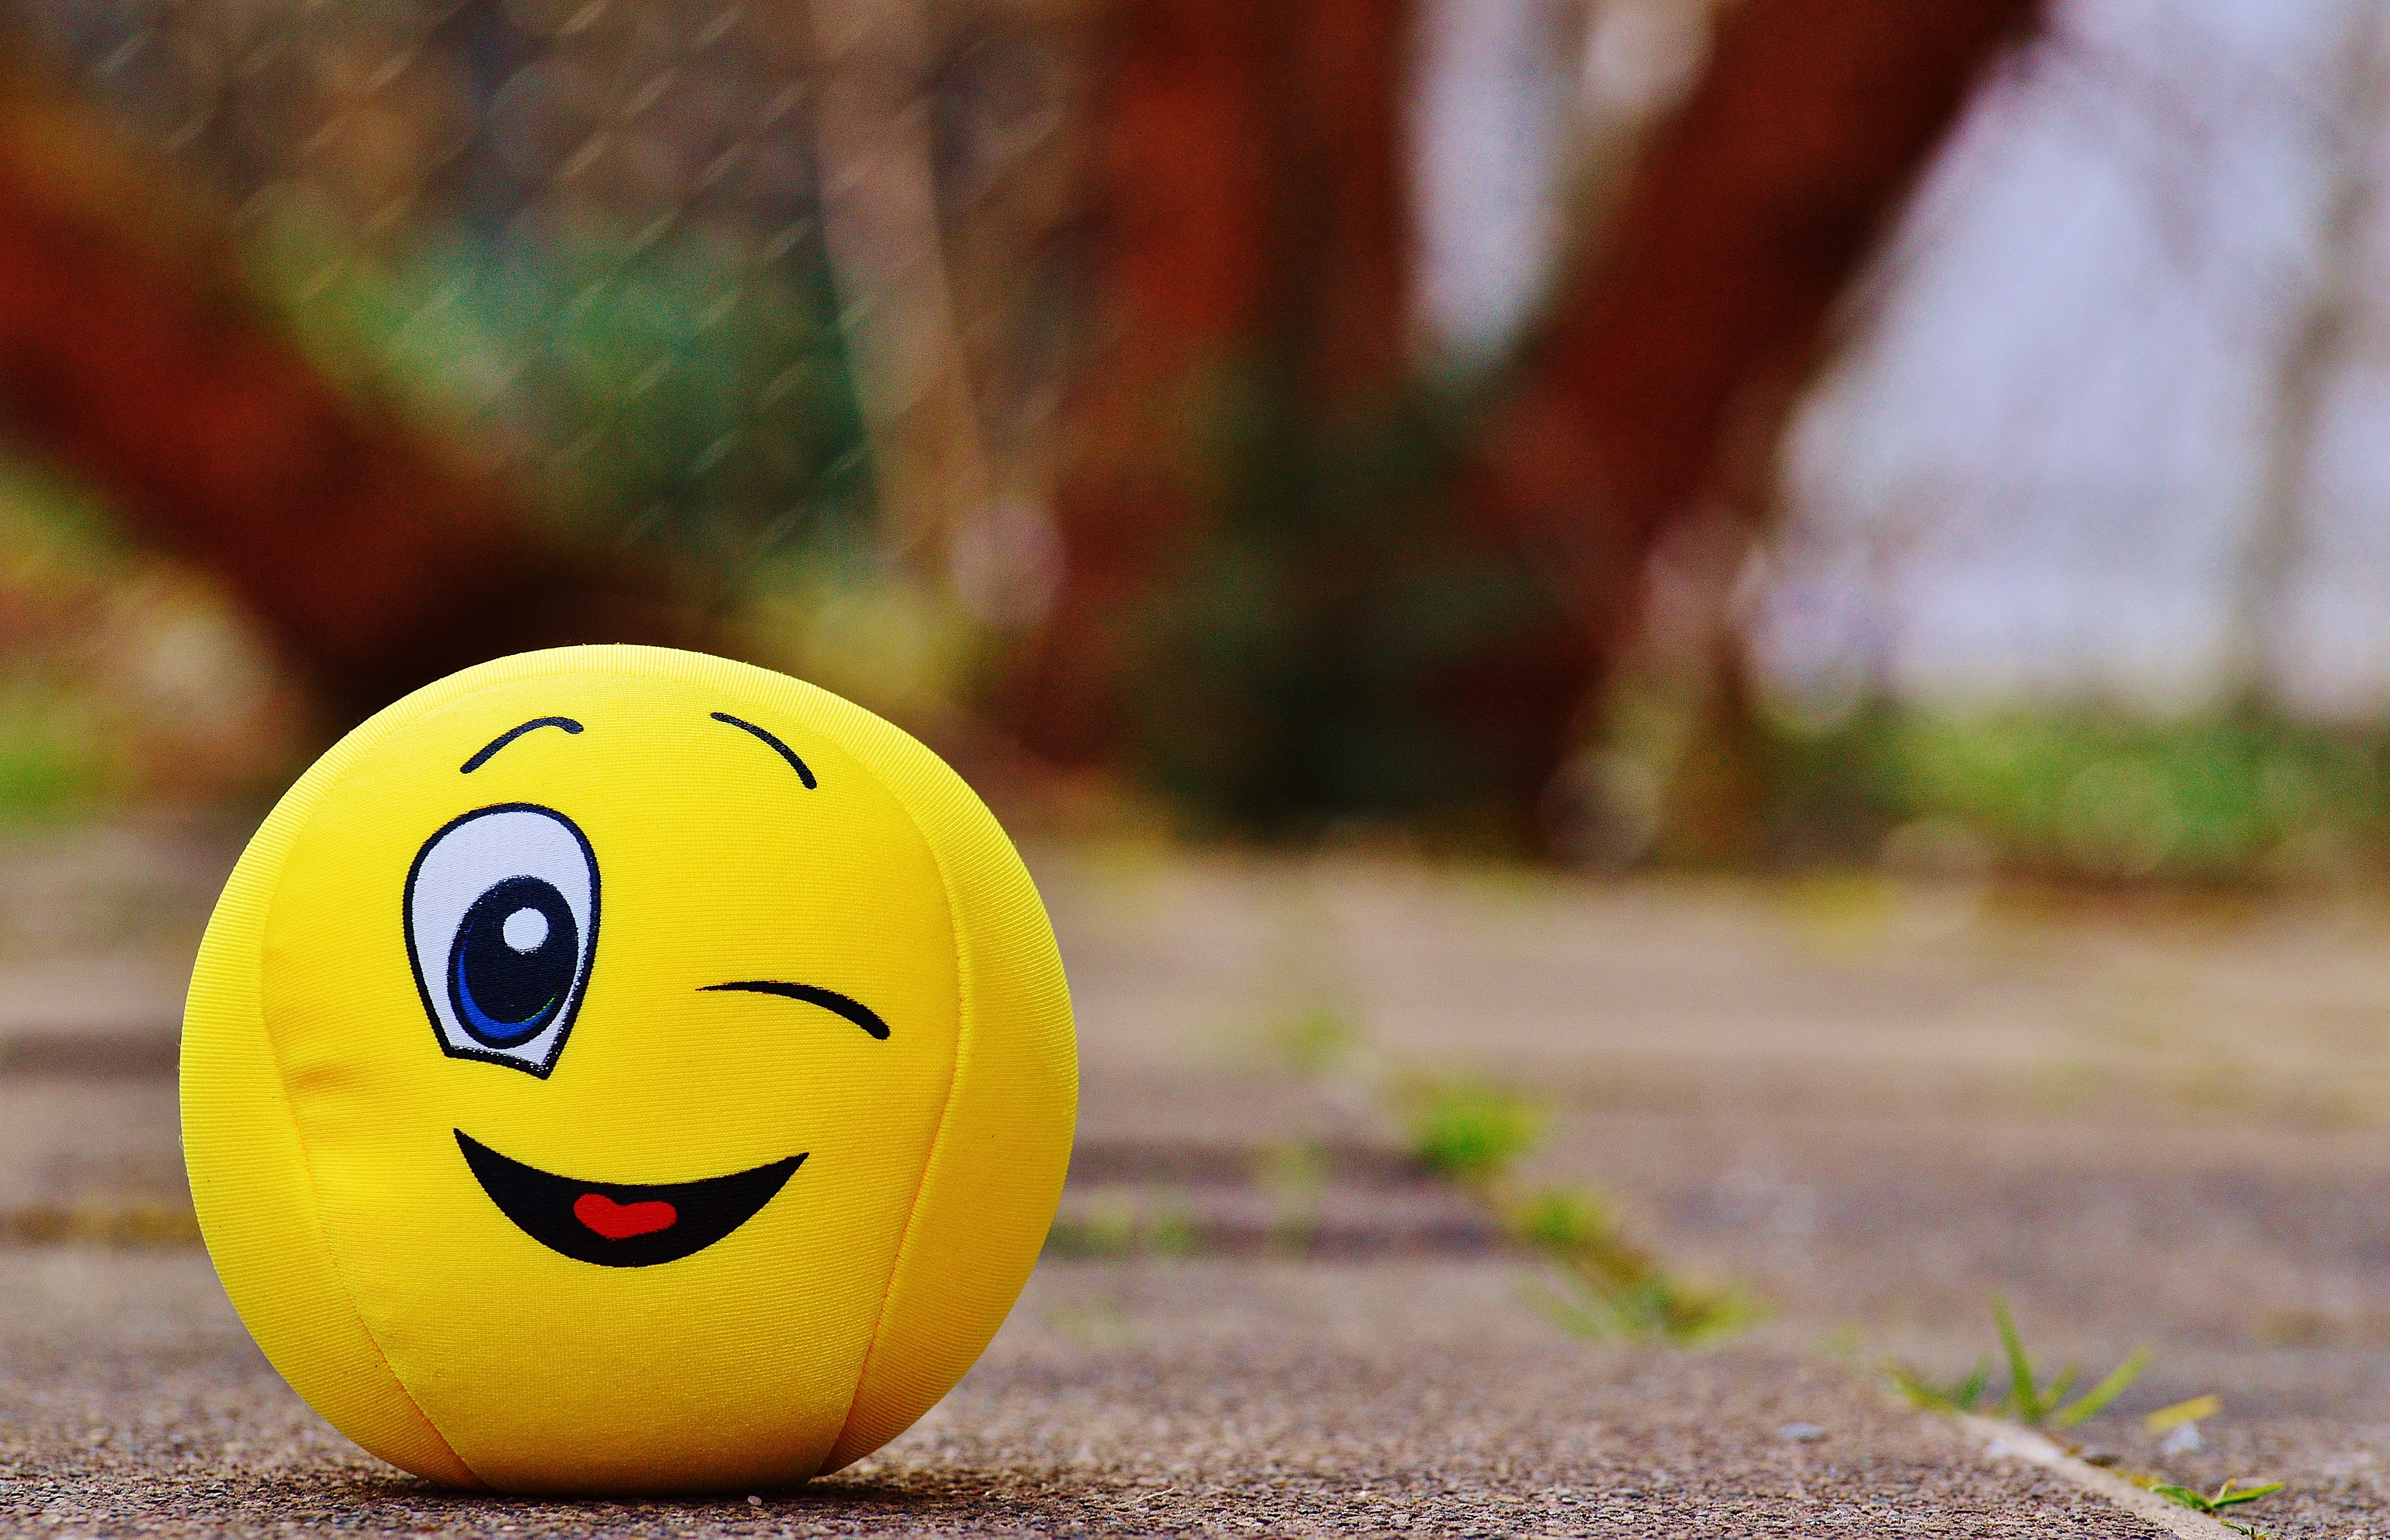 Wallpaper Winking Smiley Ball Plush Toy On